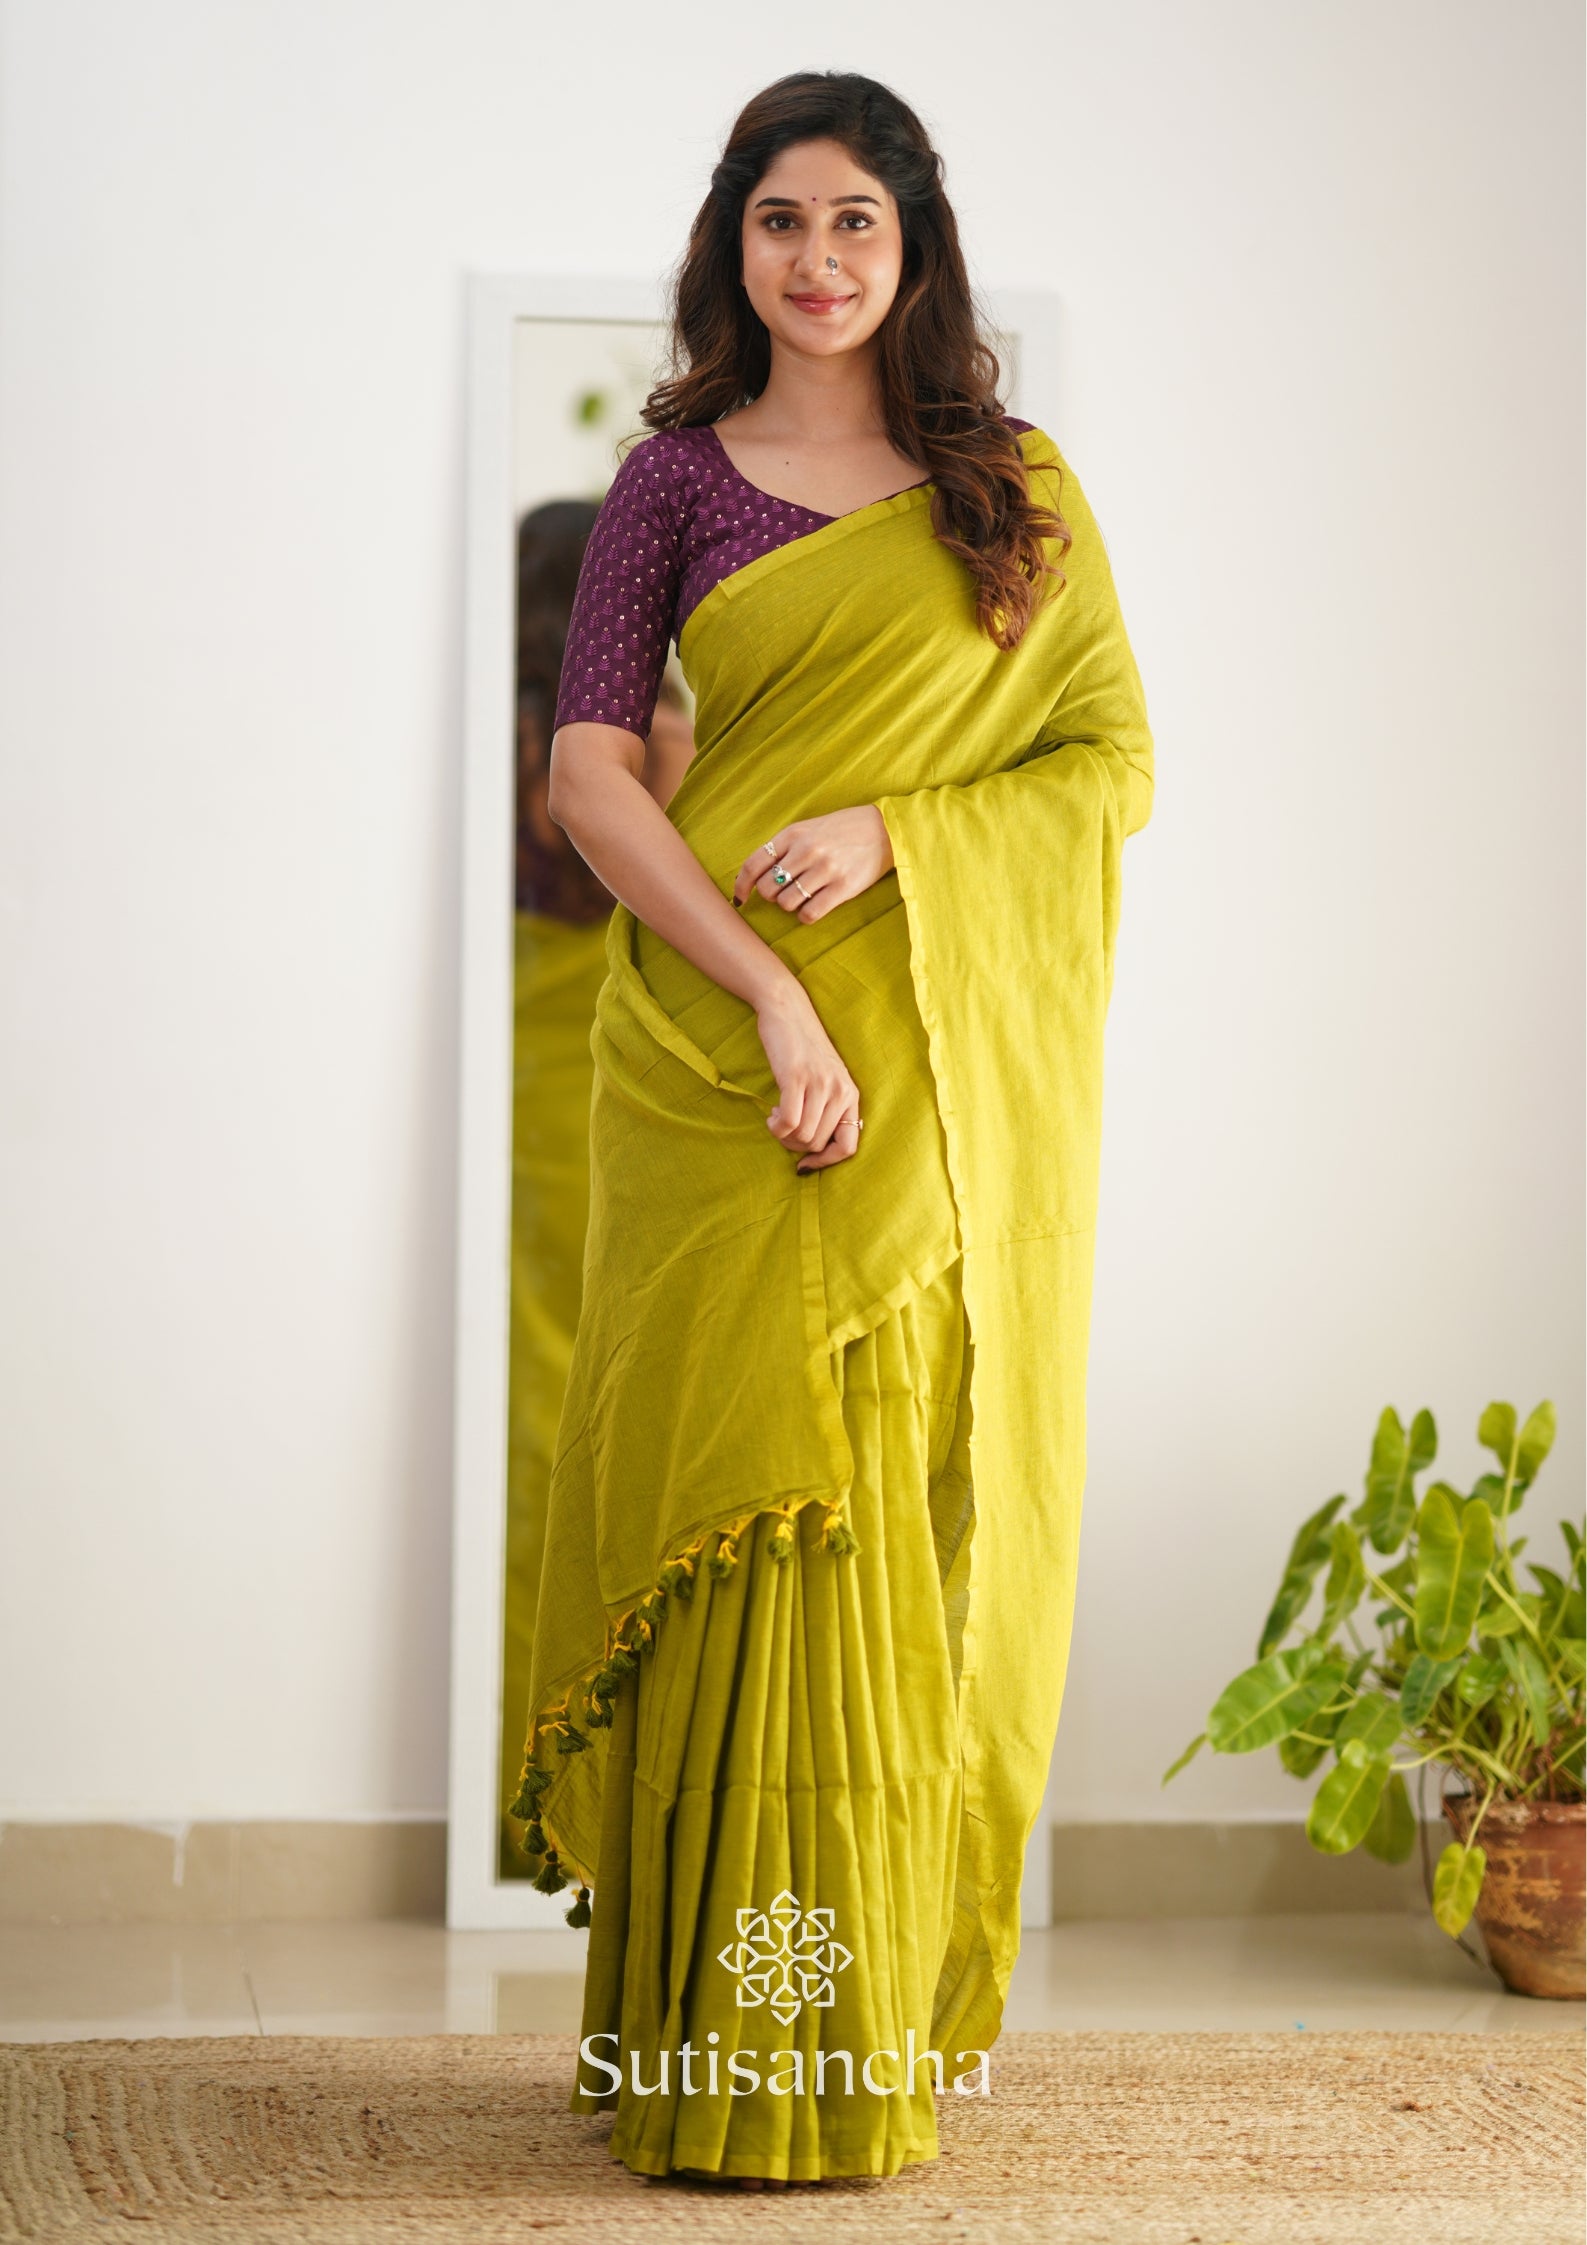 Sutisancha Lime colour Khadi Saree with designer Blouse